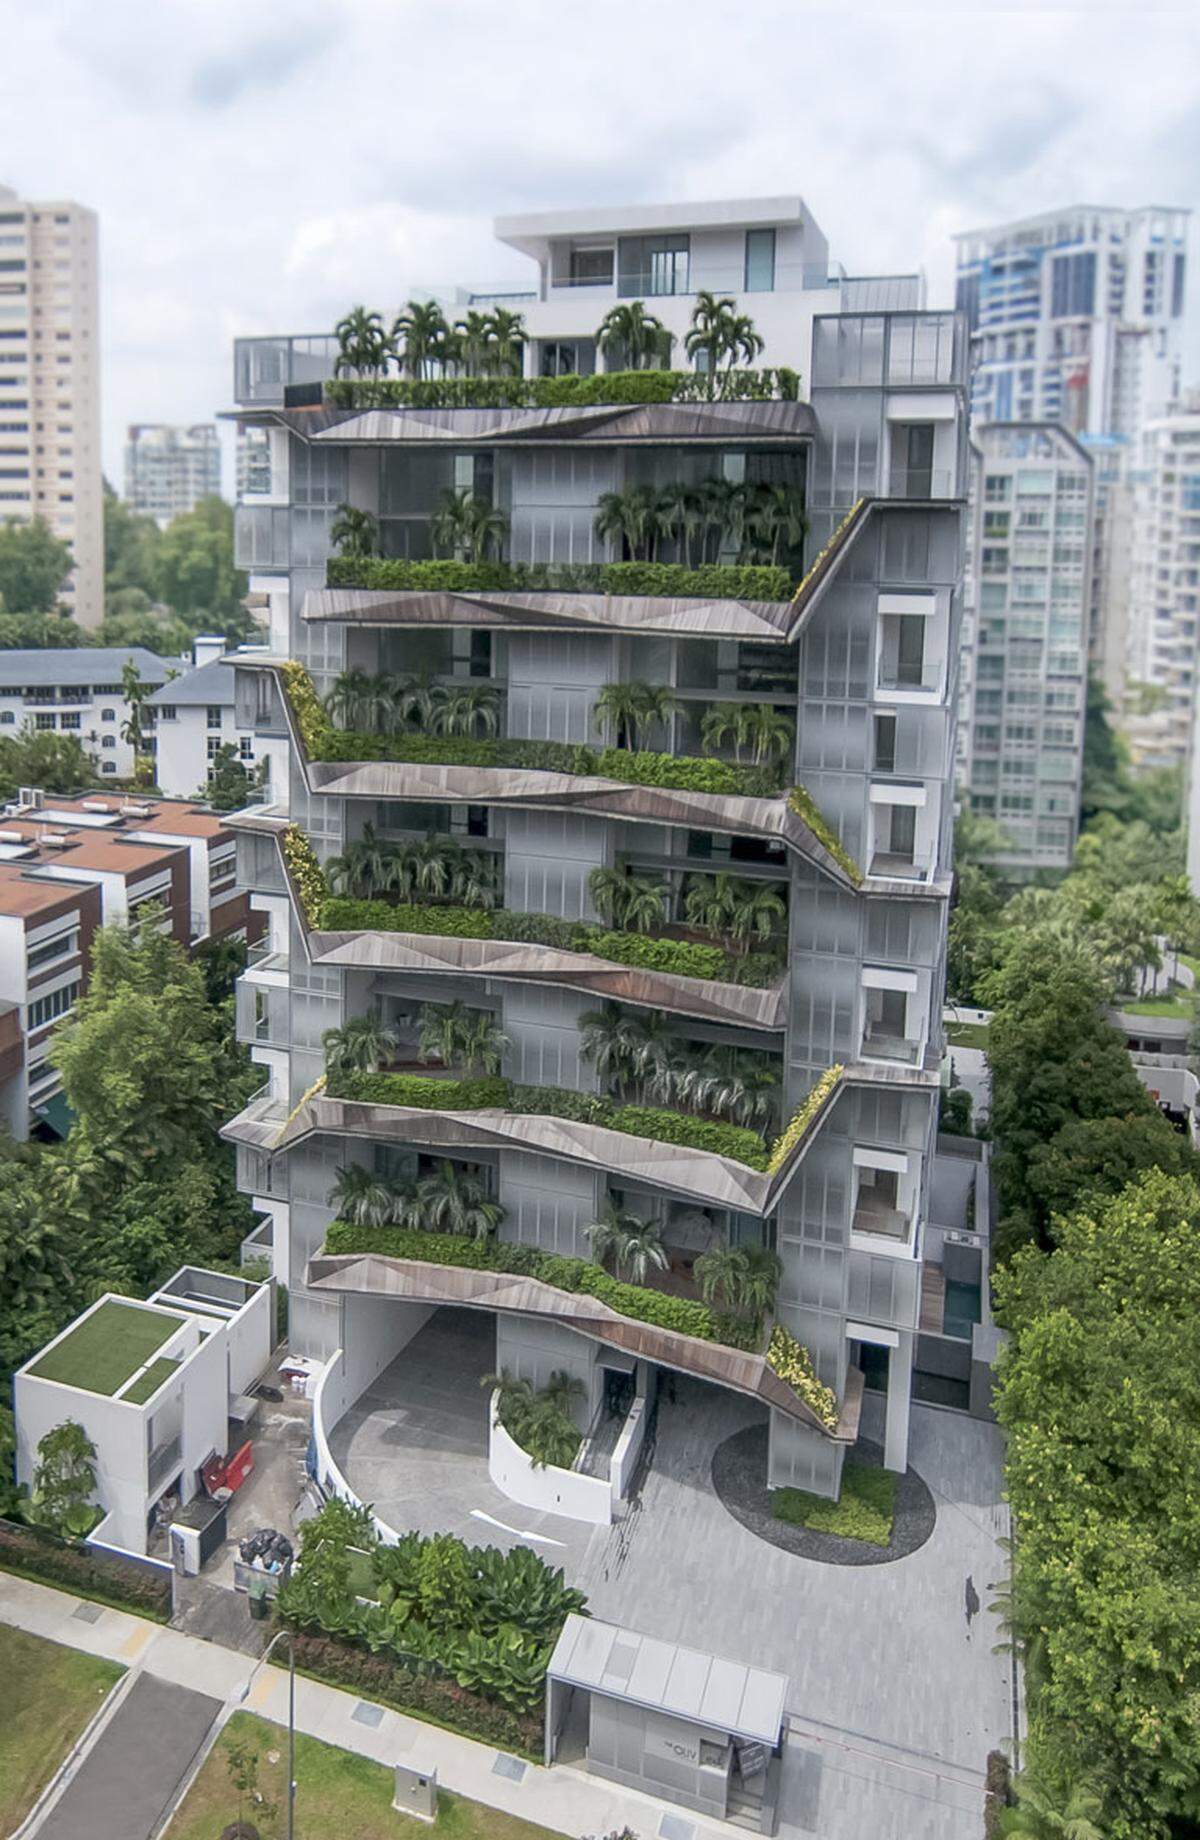 Best Residential Development: The Oliv (Singapur), Architekt: W Architects Pte Ltd, Developer: TG (Balmoral) Pte Ltd